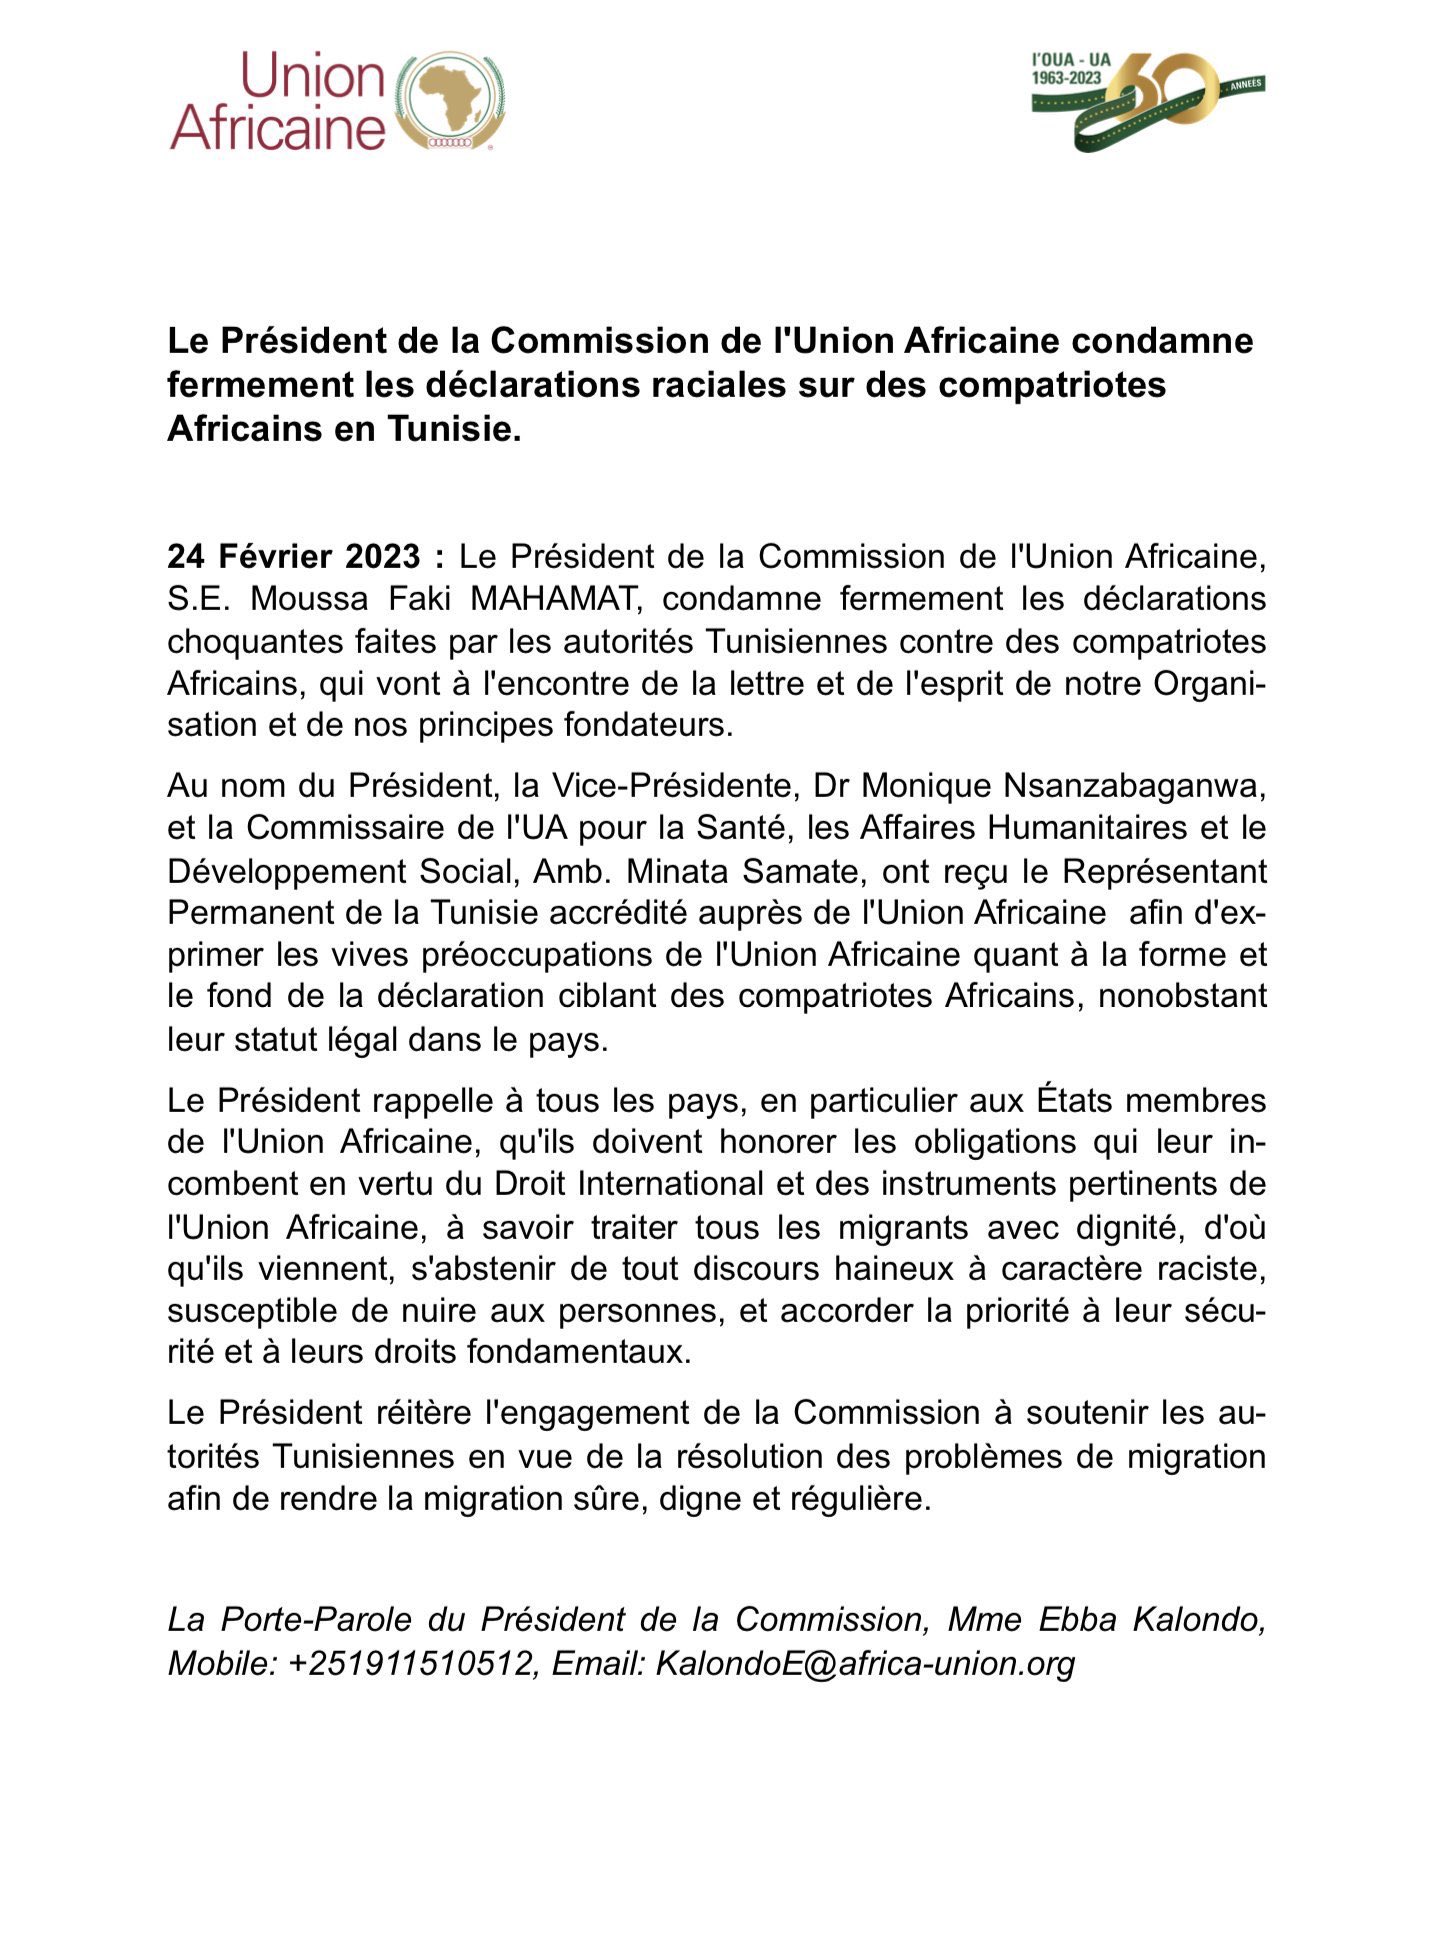 Burundi / Union Africaine : Condamnation unanime du “Négrophobe” Président de Tunisie